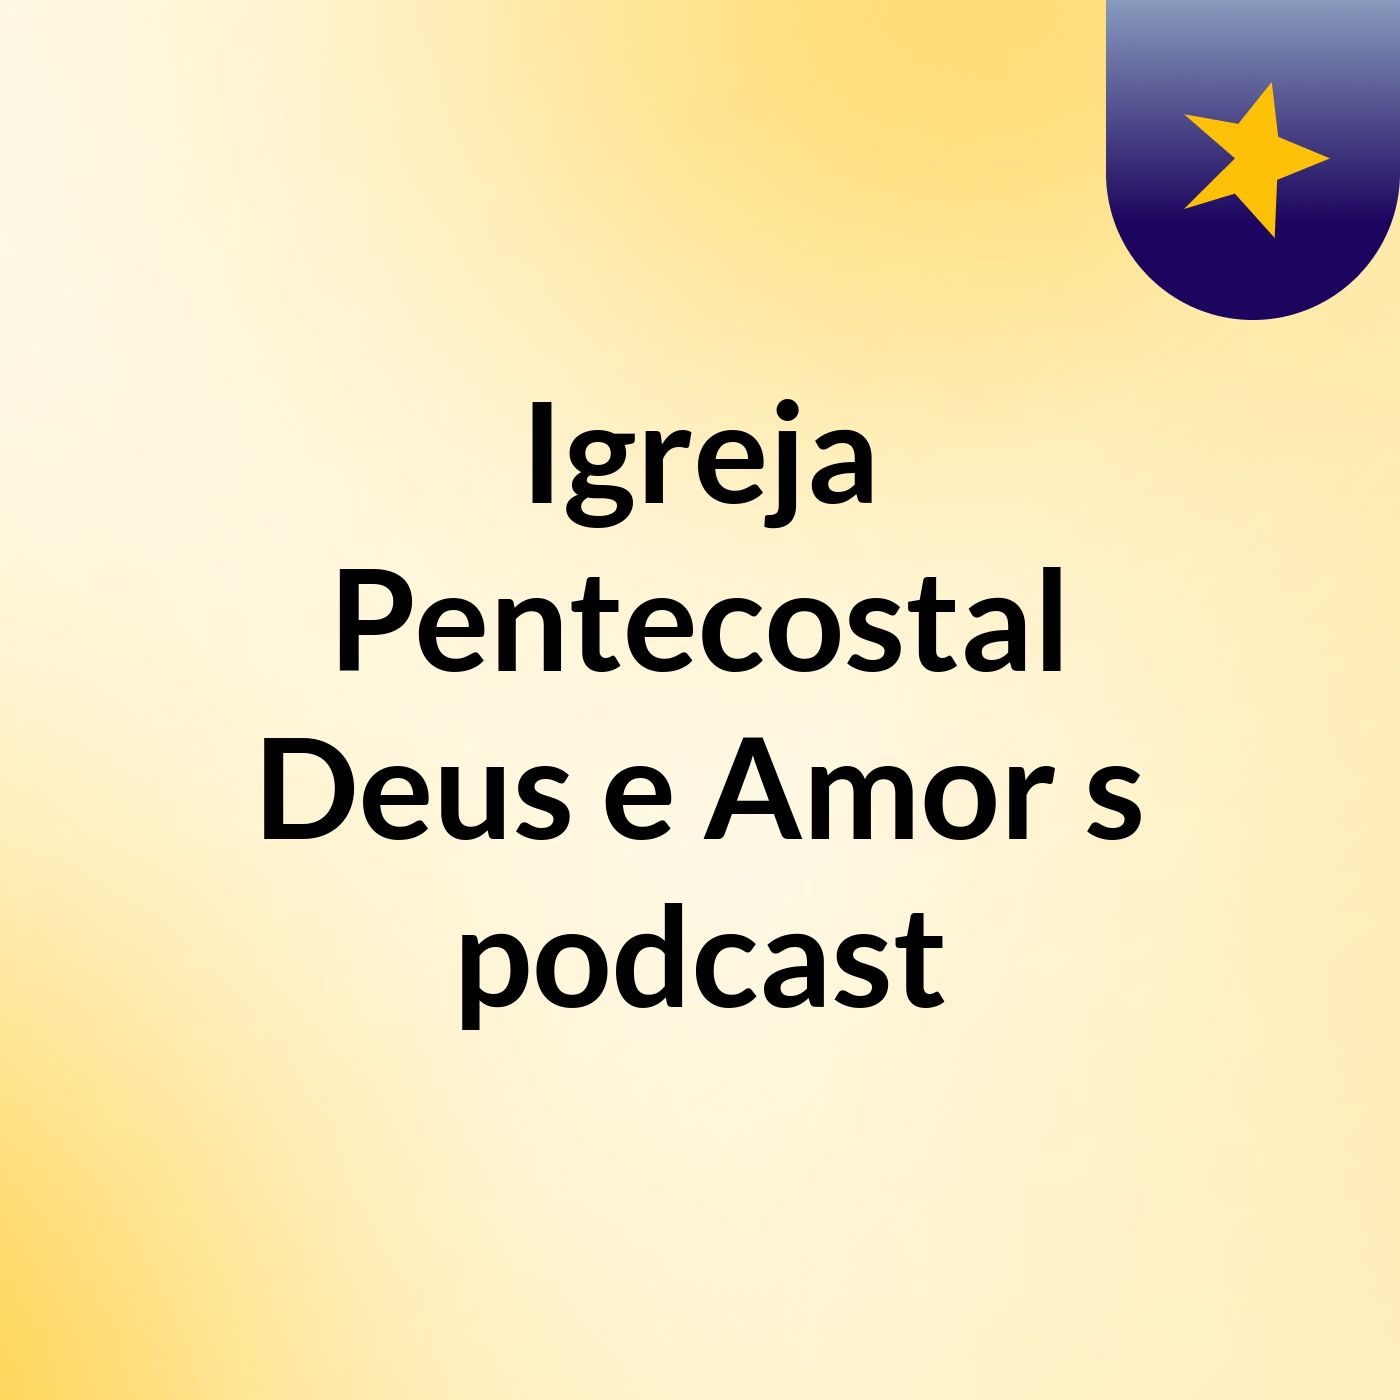 Igreja Pentecostal Deus e Amor's podcast